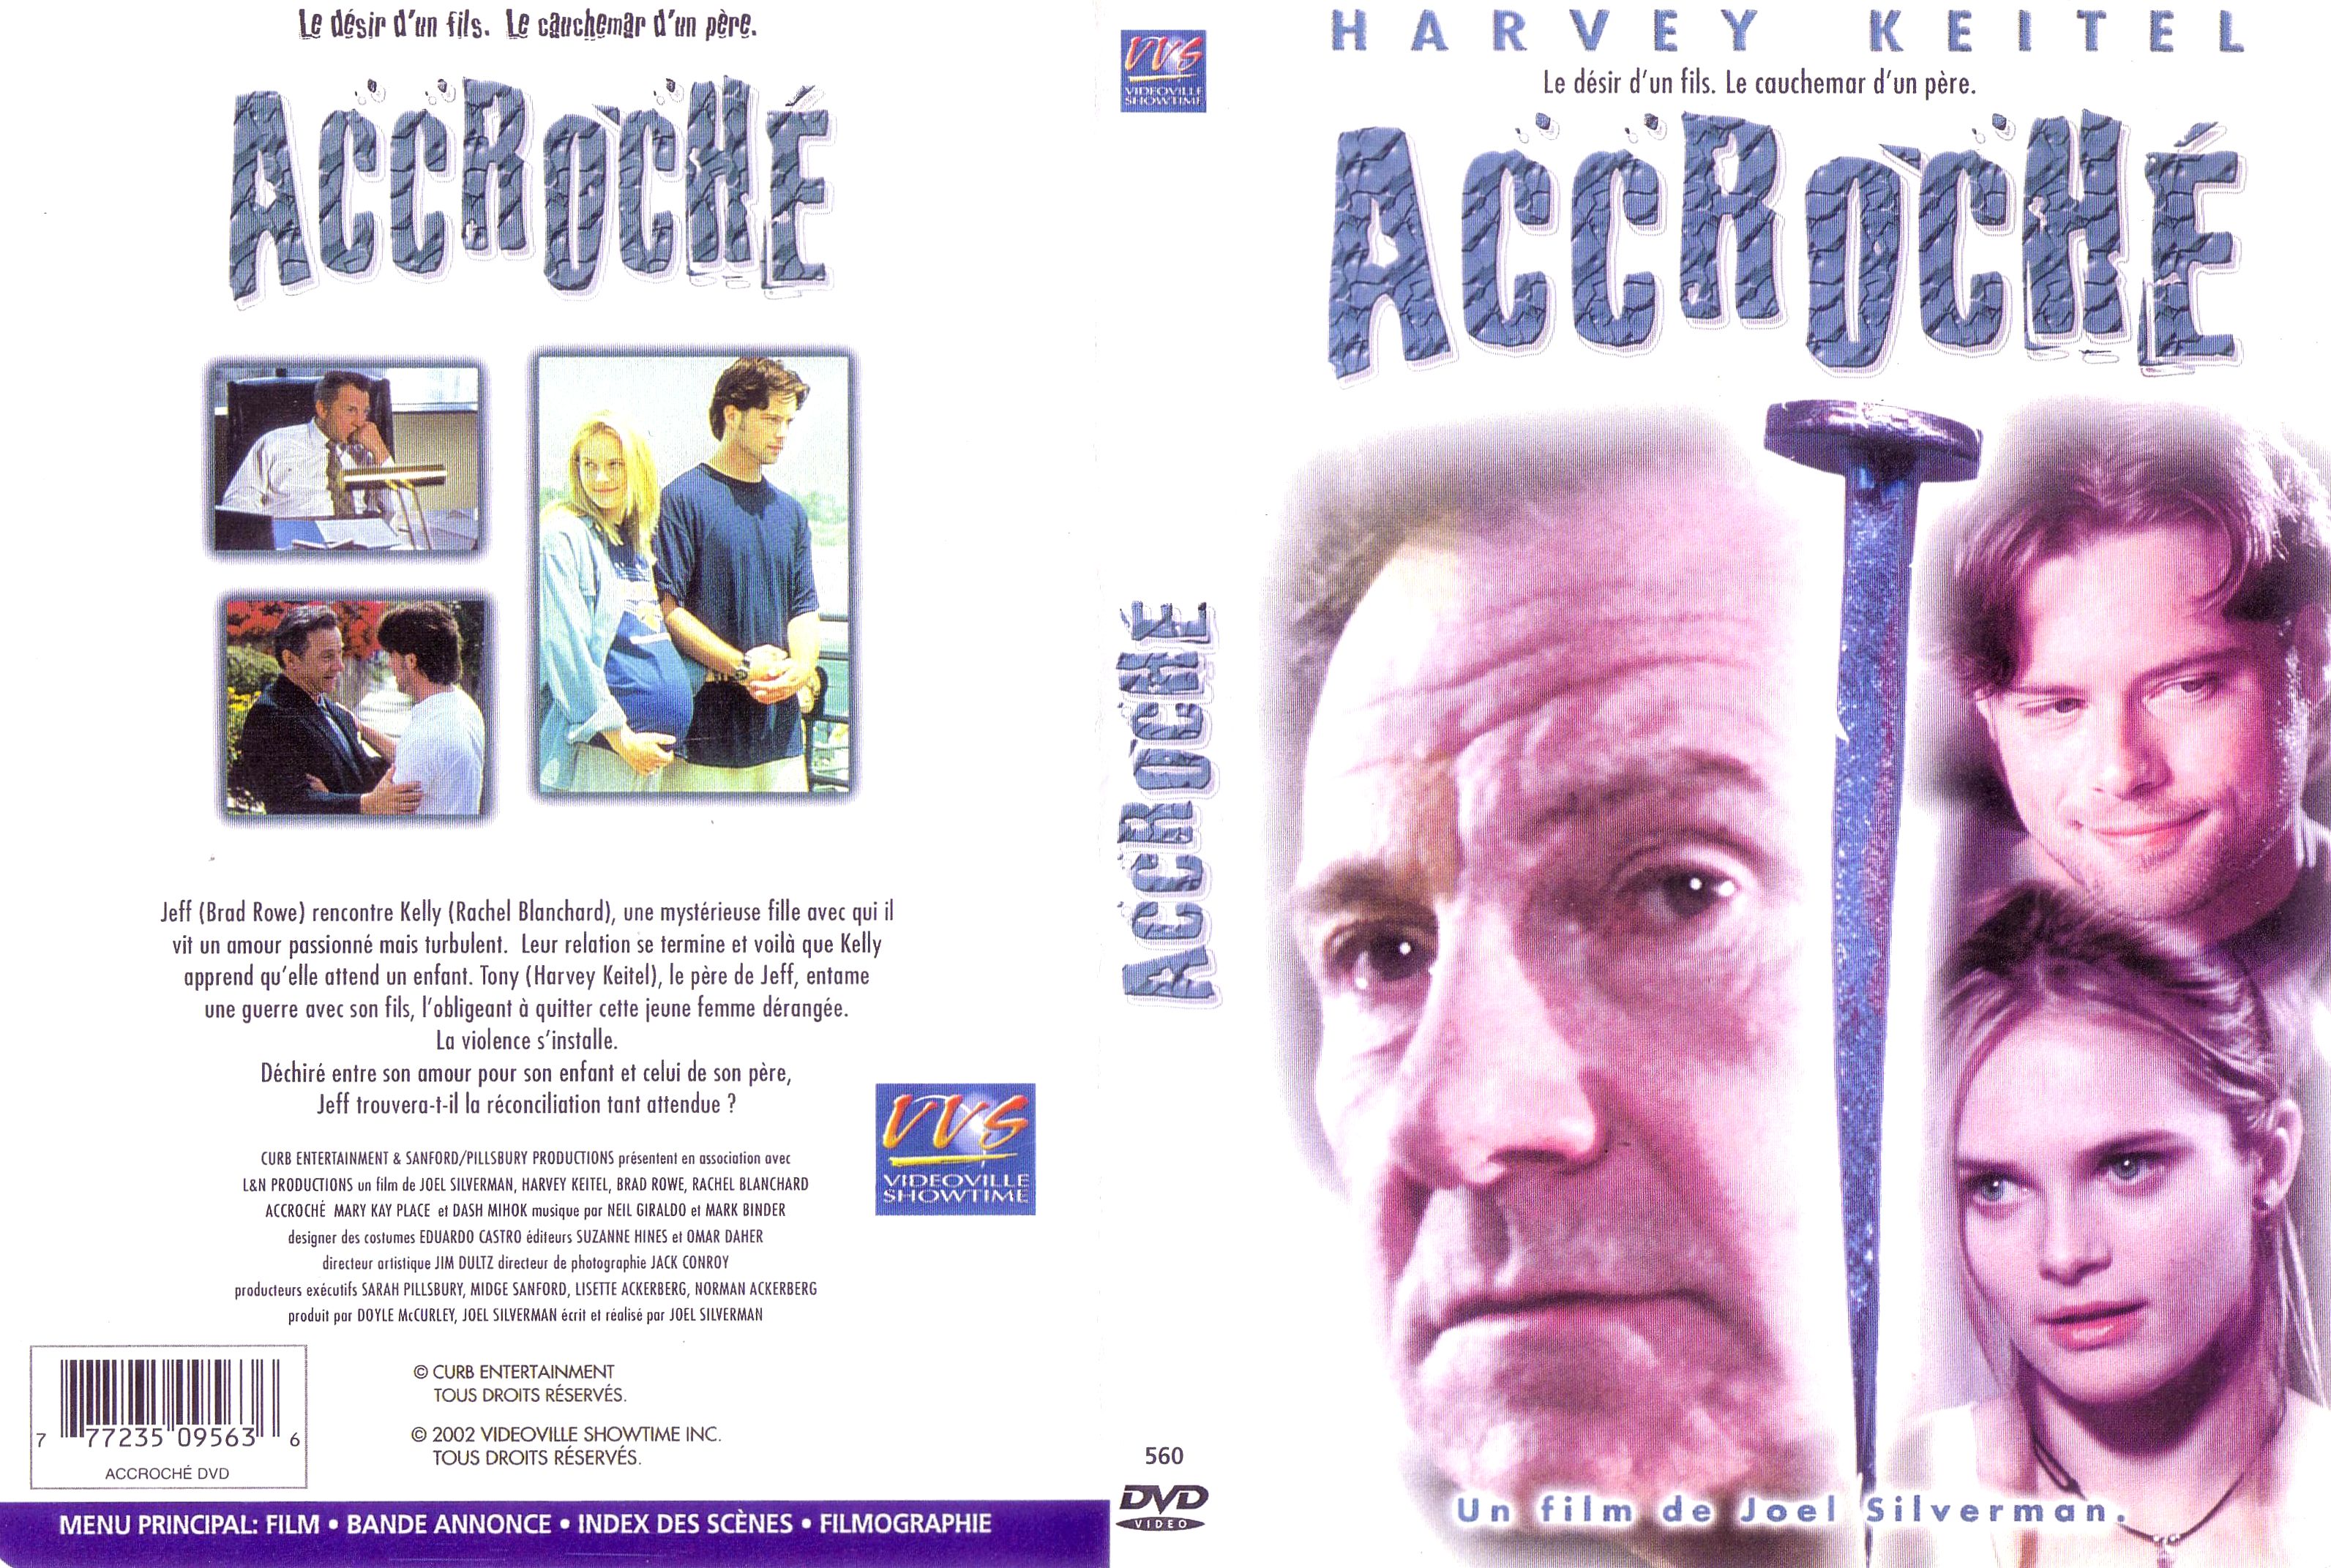 Jaquette DVD Accroch